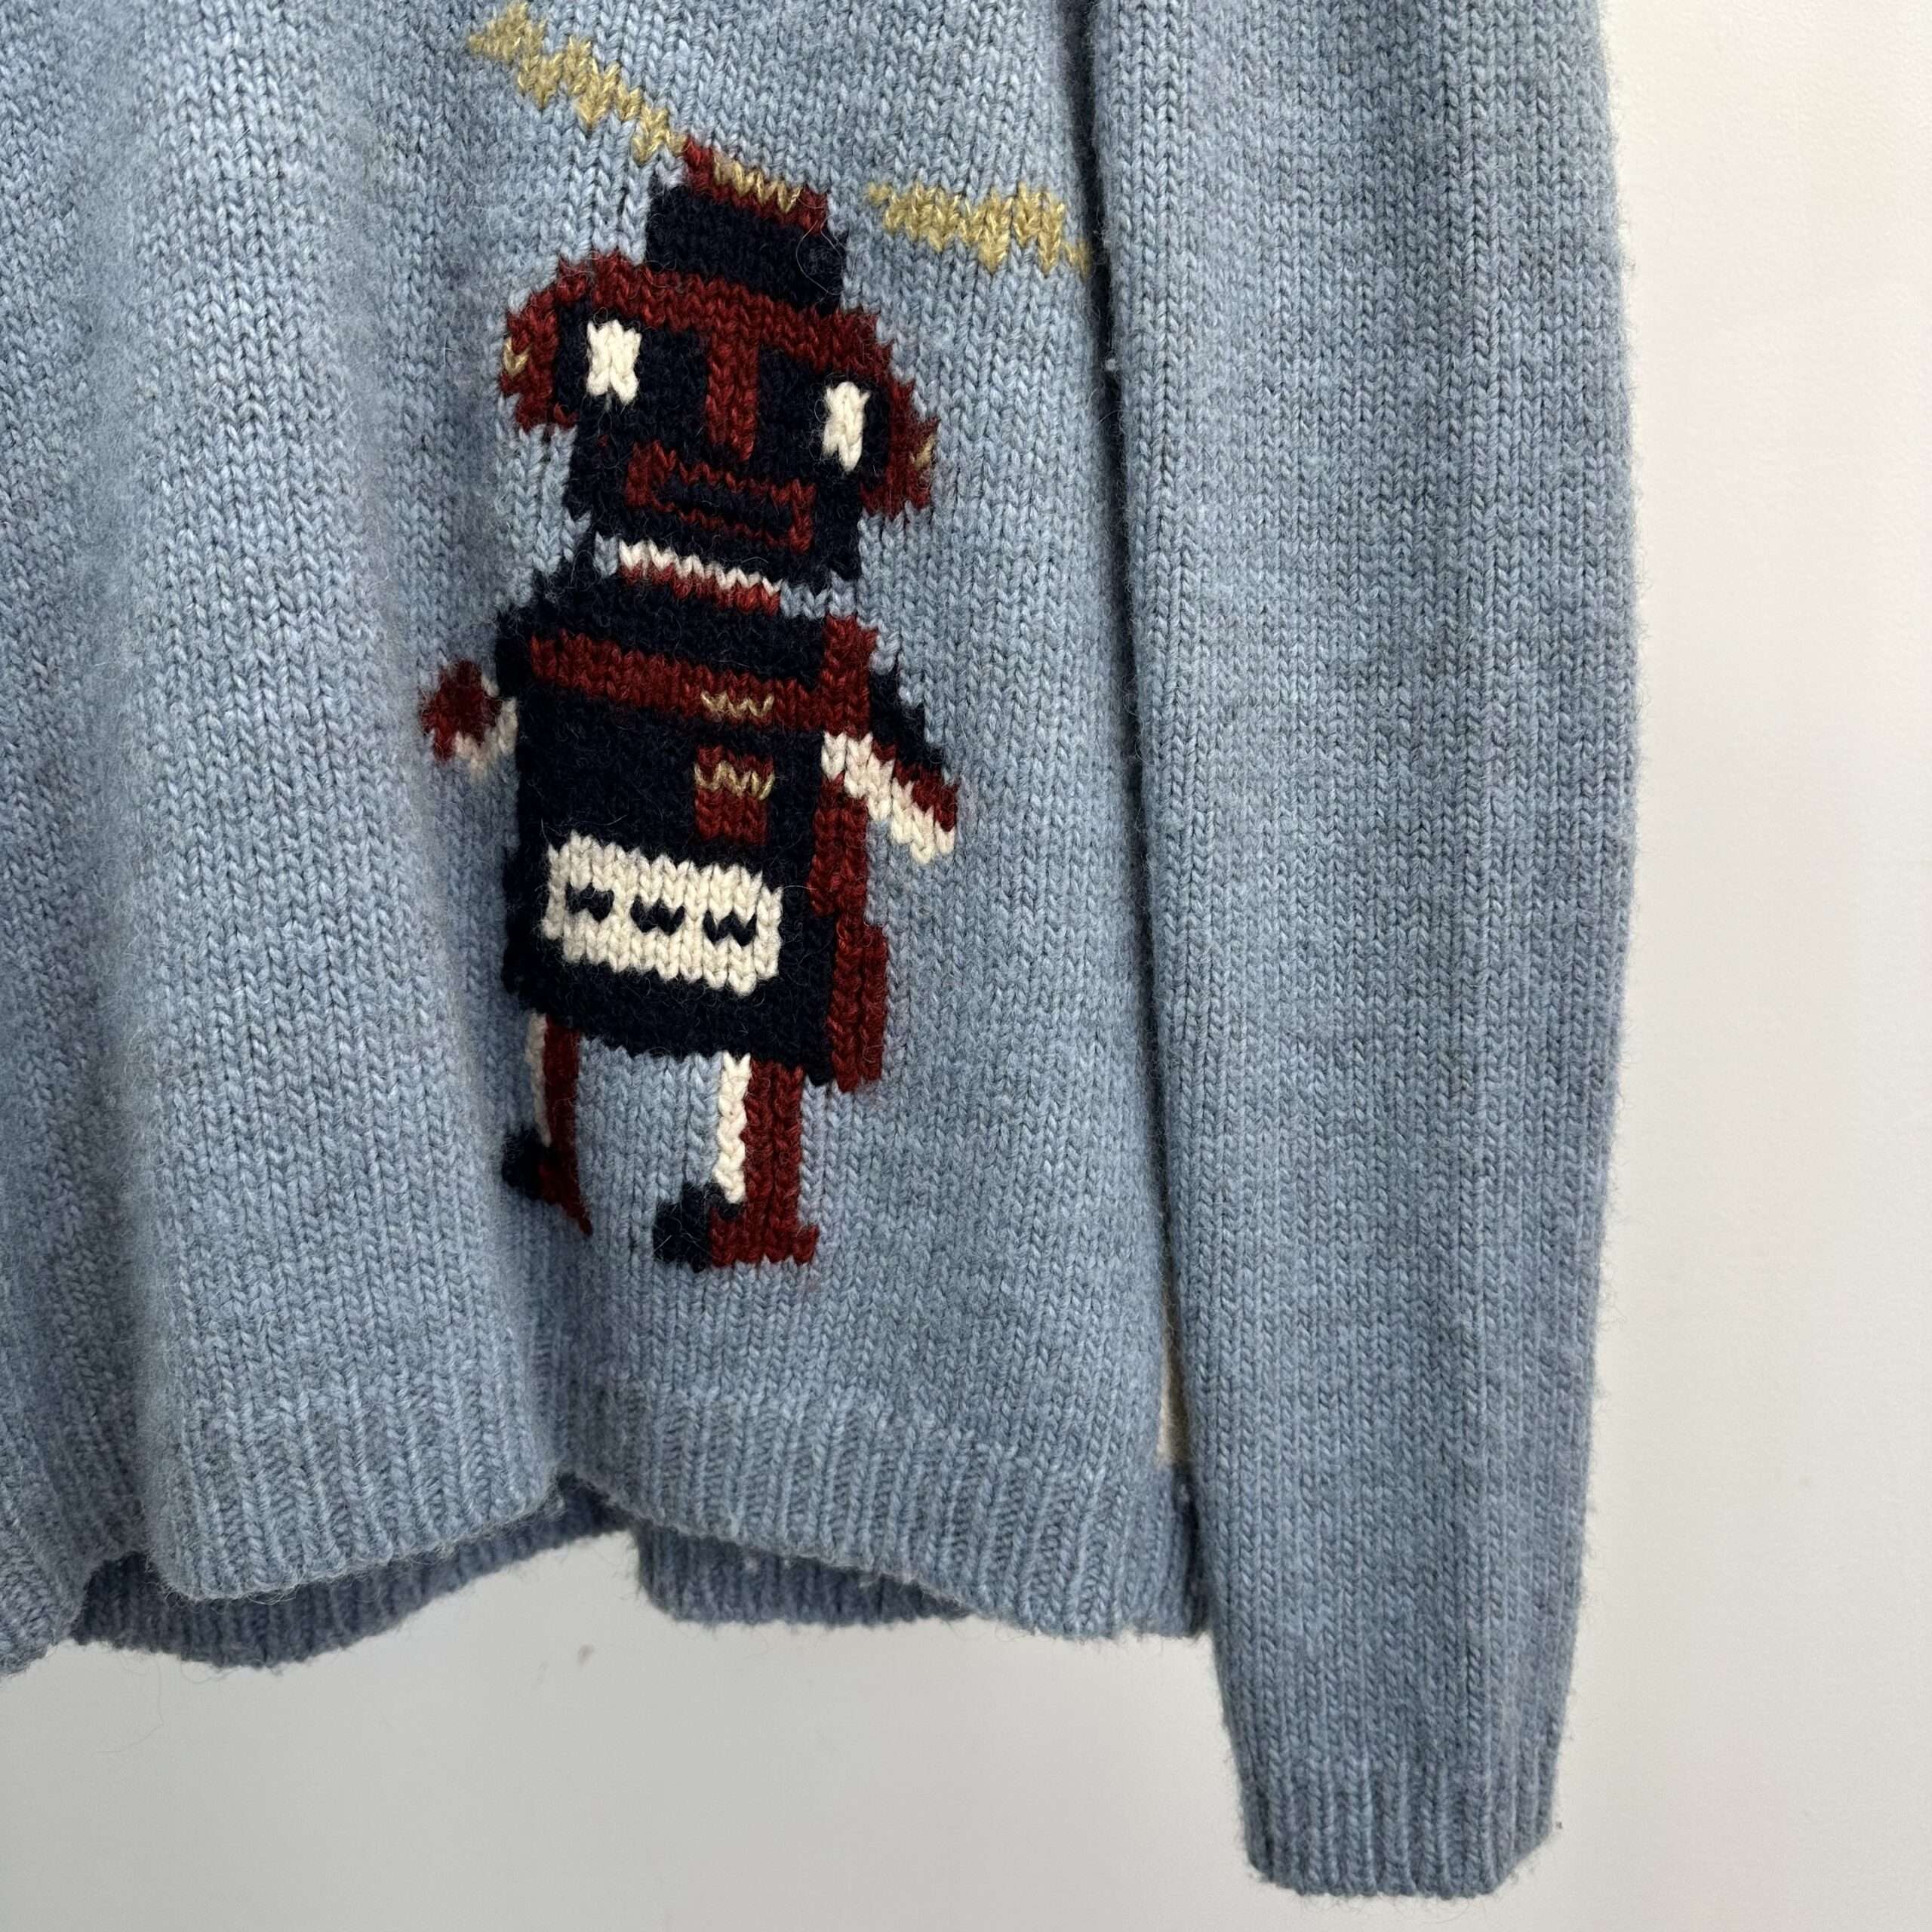 Saint Laurent 'Robot' Sweater - Veblen